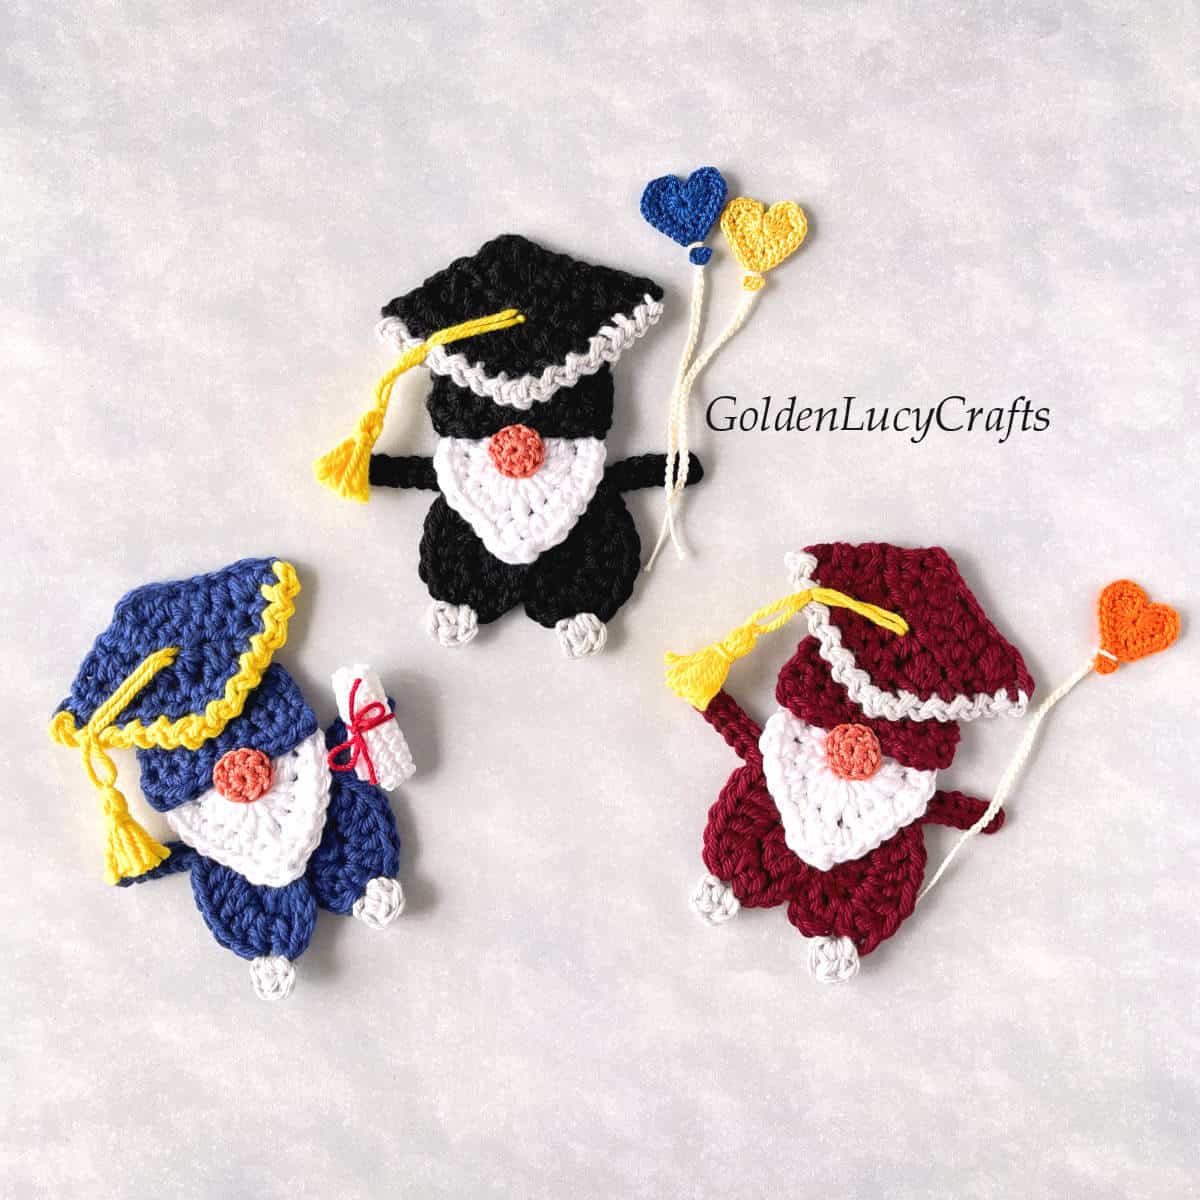 Three crocheted graduation gnomes.